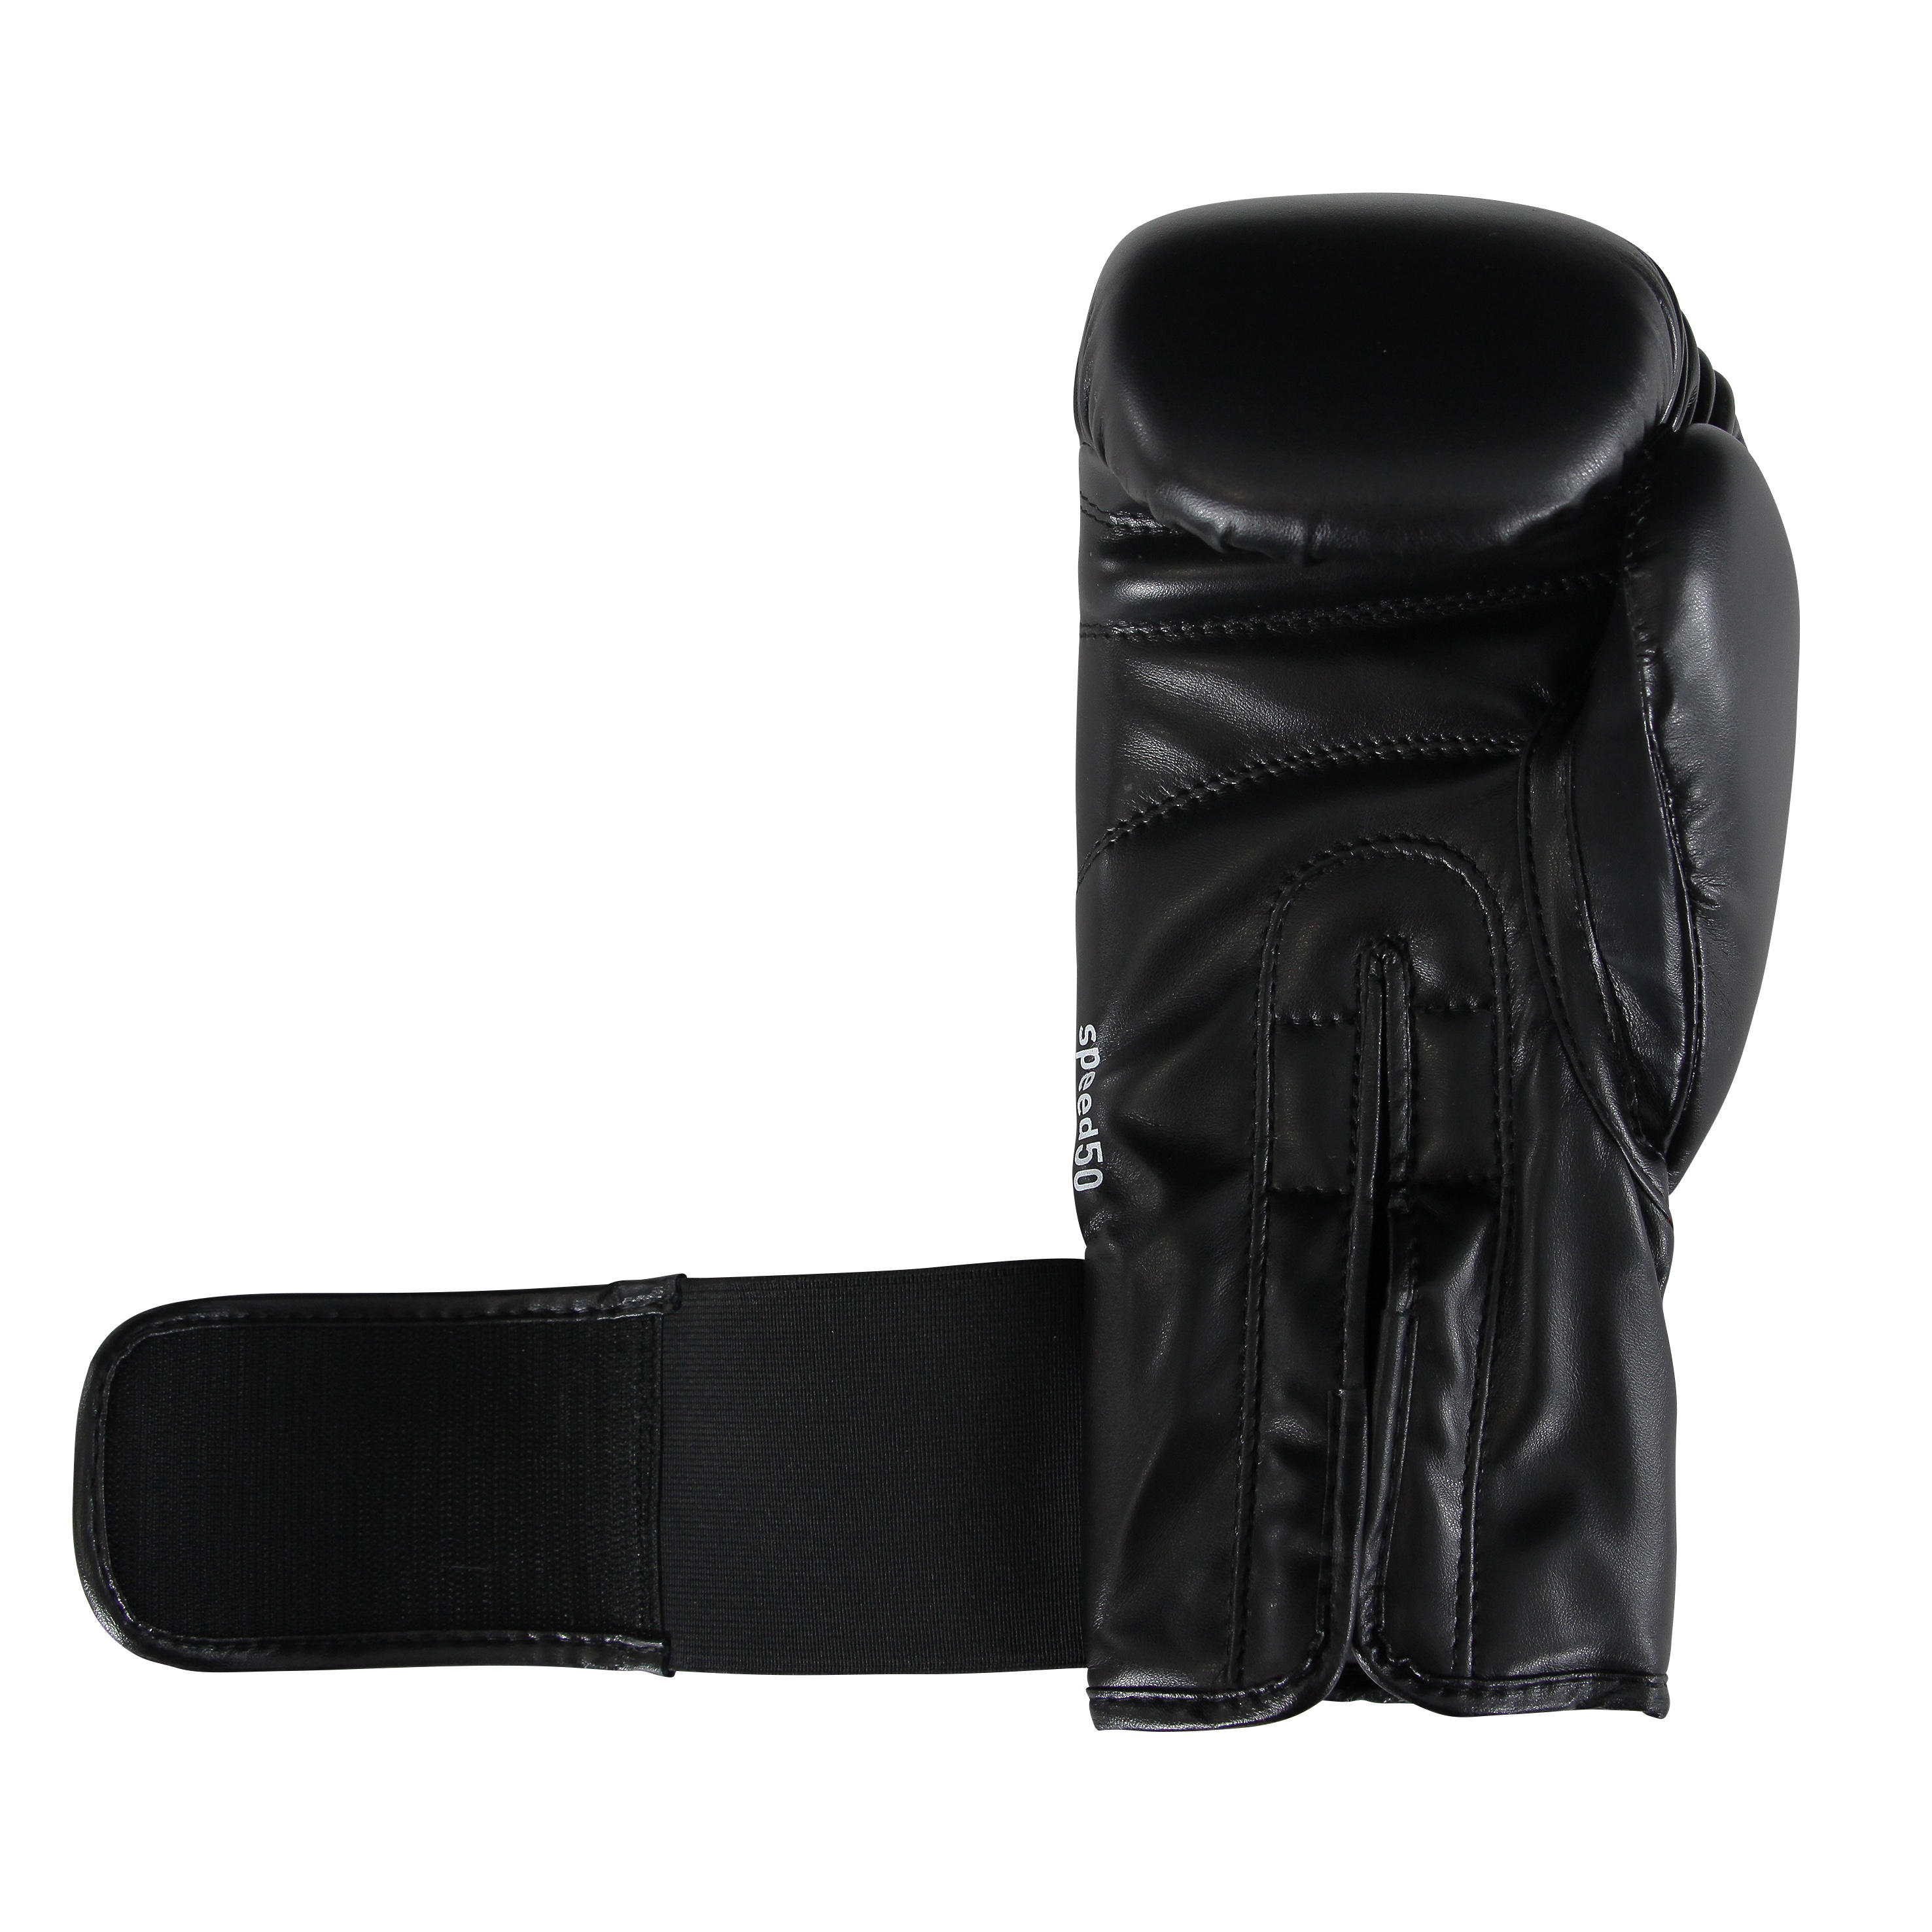 Beginners' Boxing Kit: Gloves, Wraps, Mouthguard 3/9